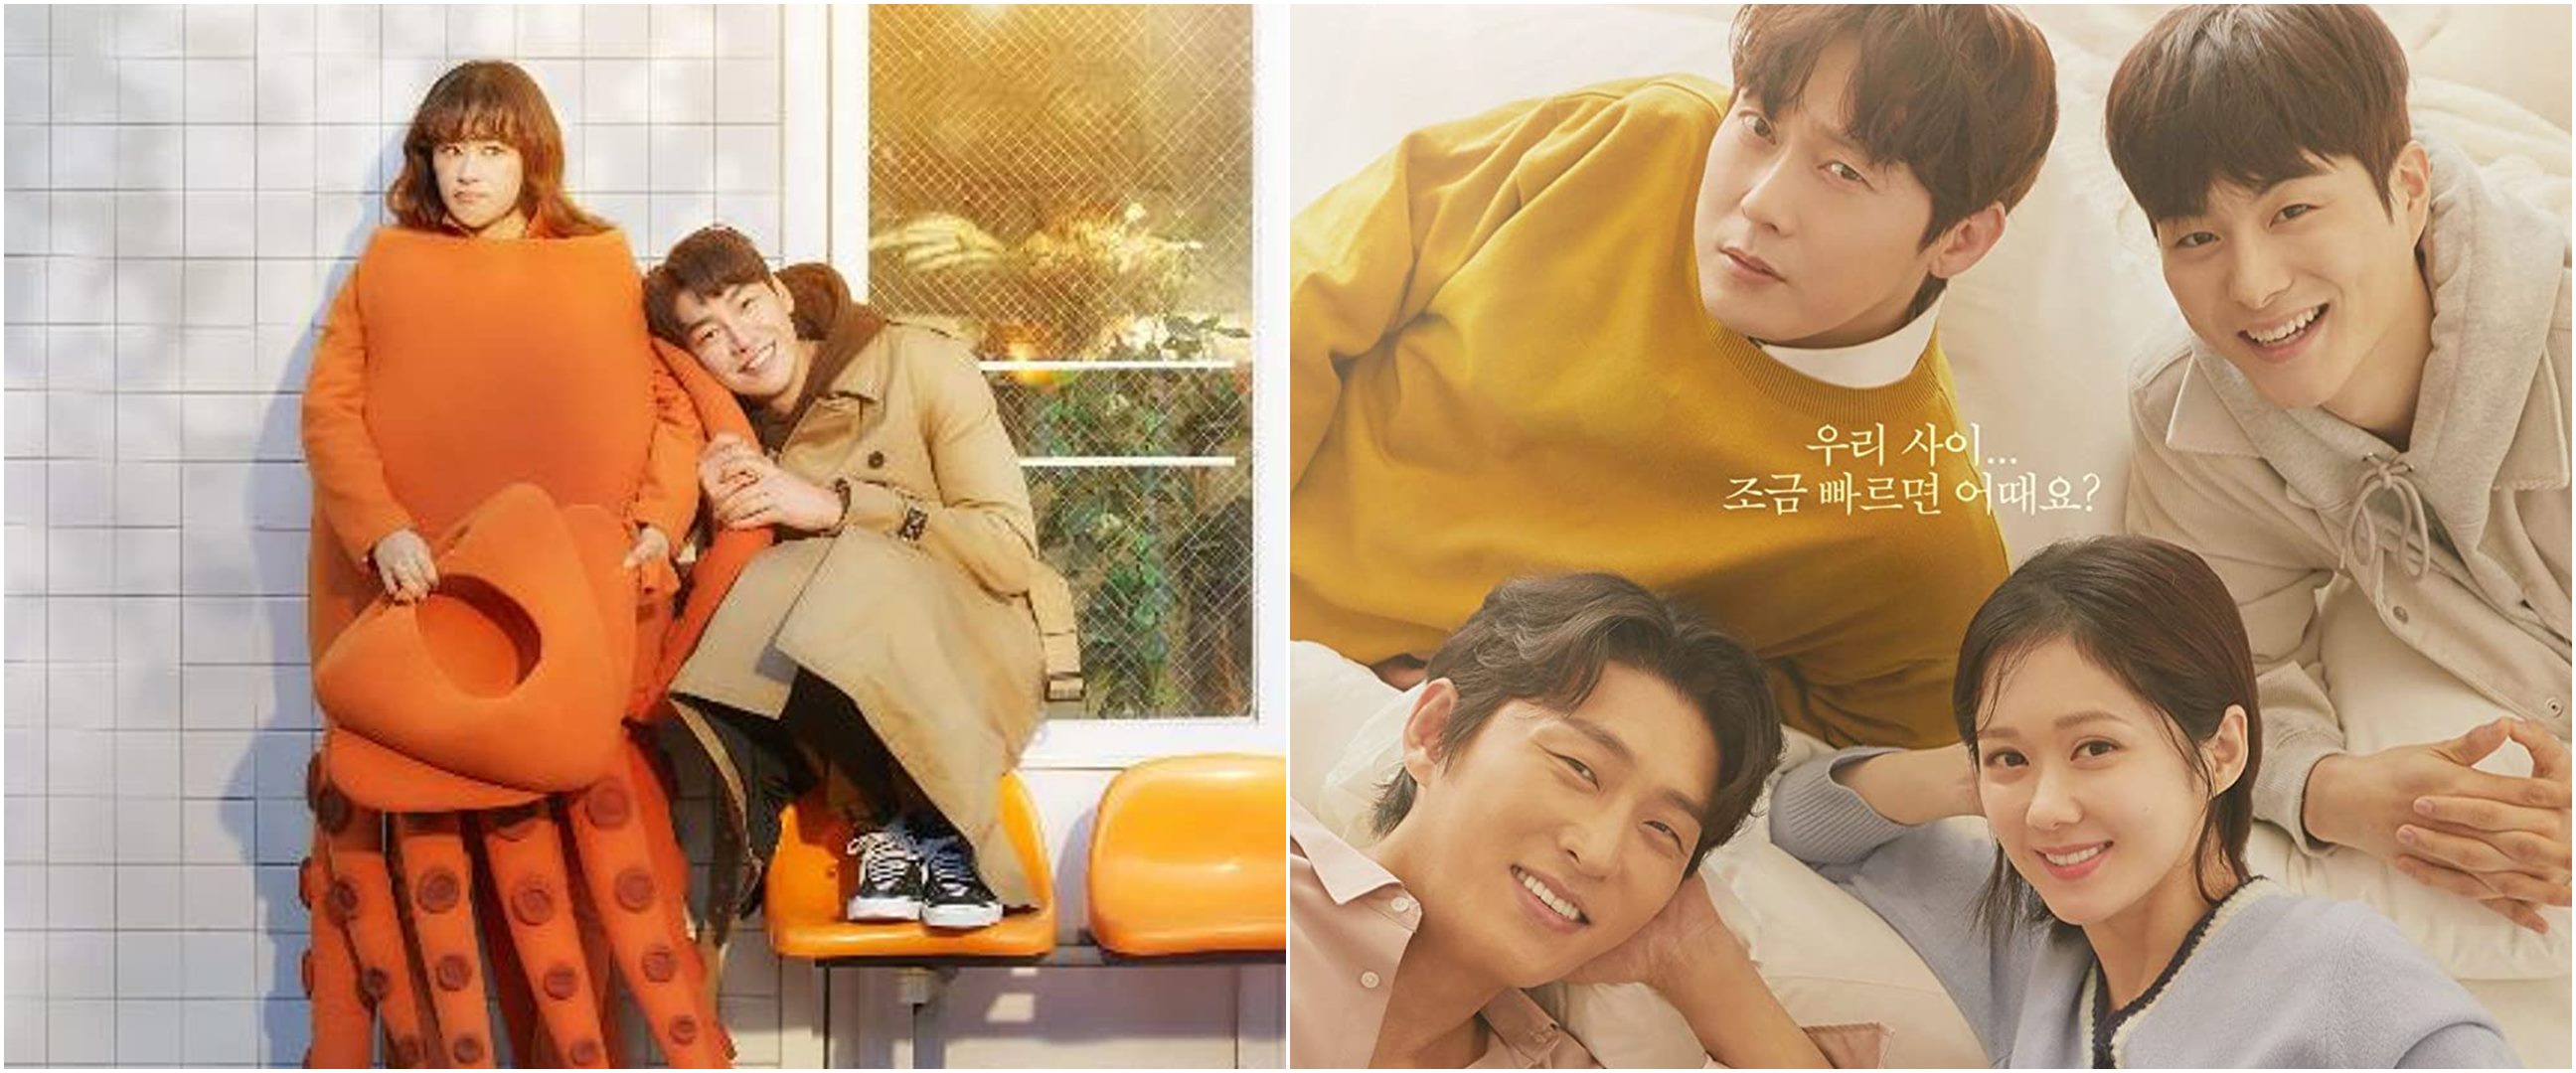 11 Rekomendasi drama Korea romantis komedi, Hello Me! bikin ngakak